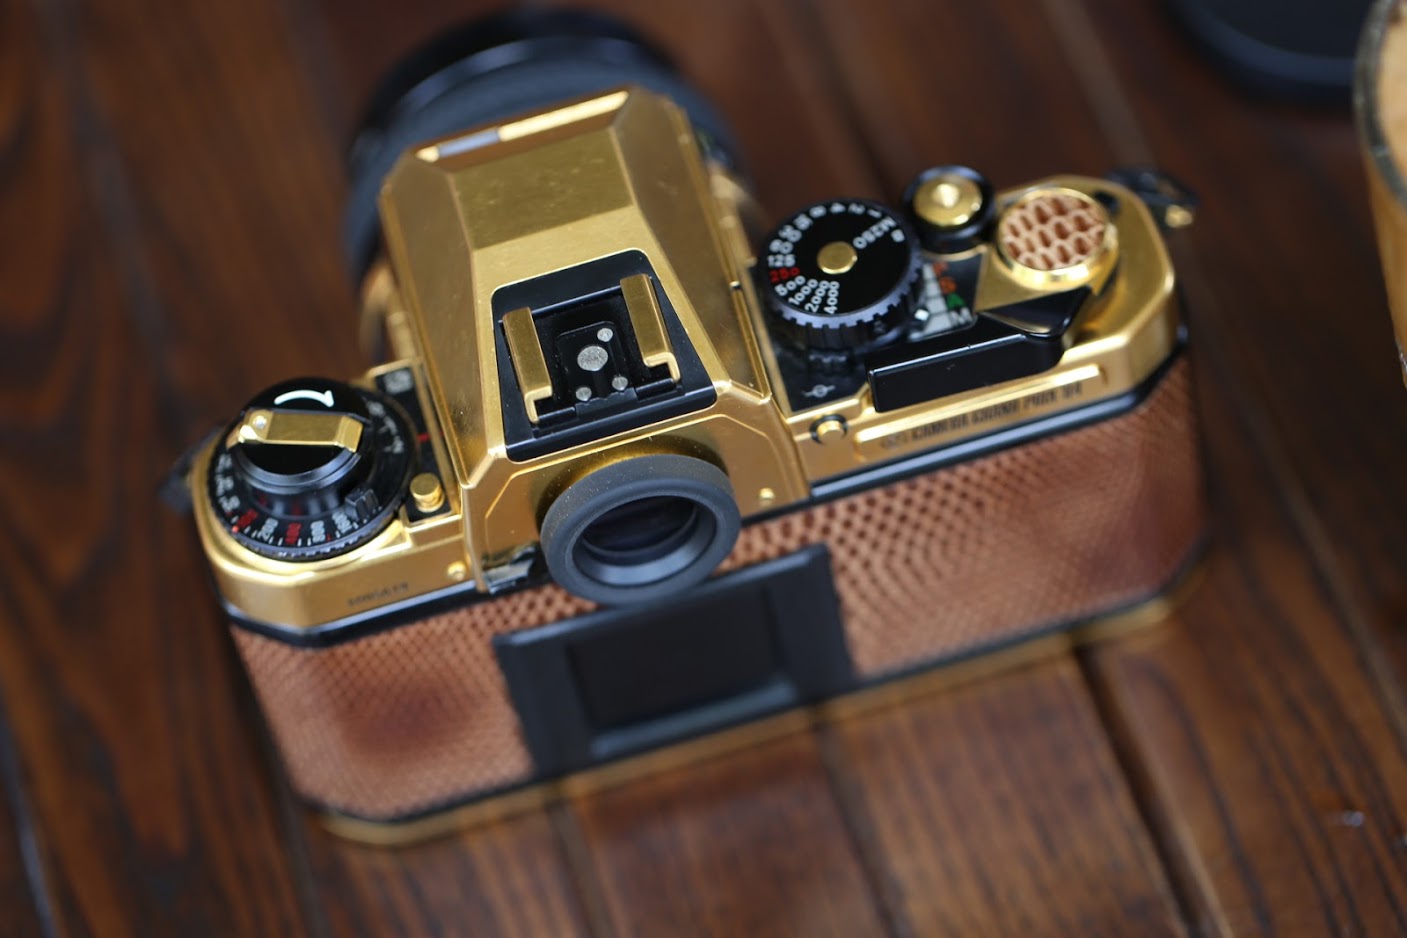 Nikon FA Gold len 50mm 1.4 AIS Limited